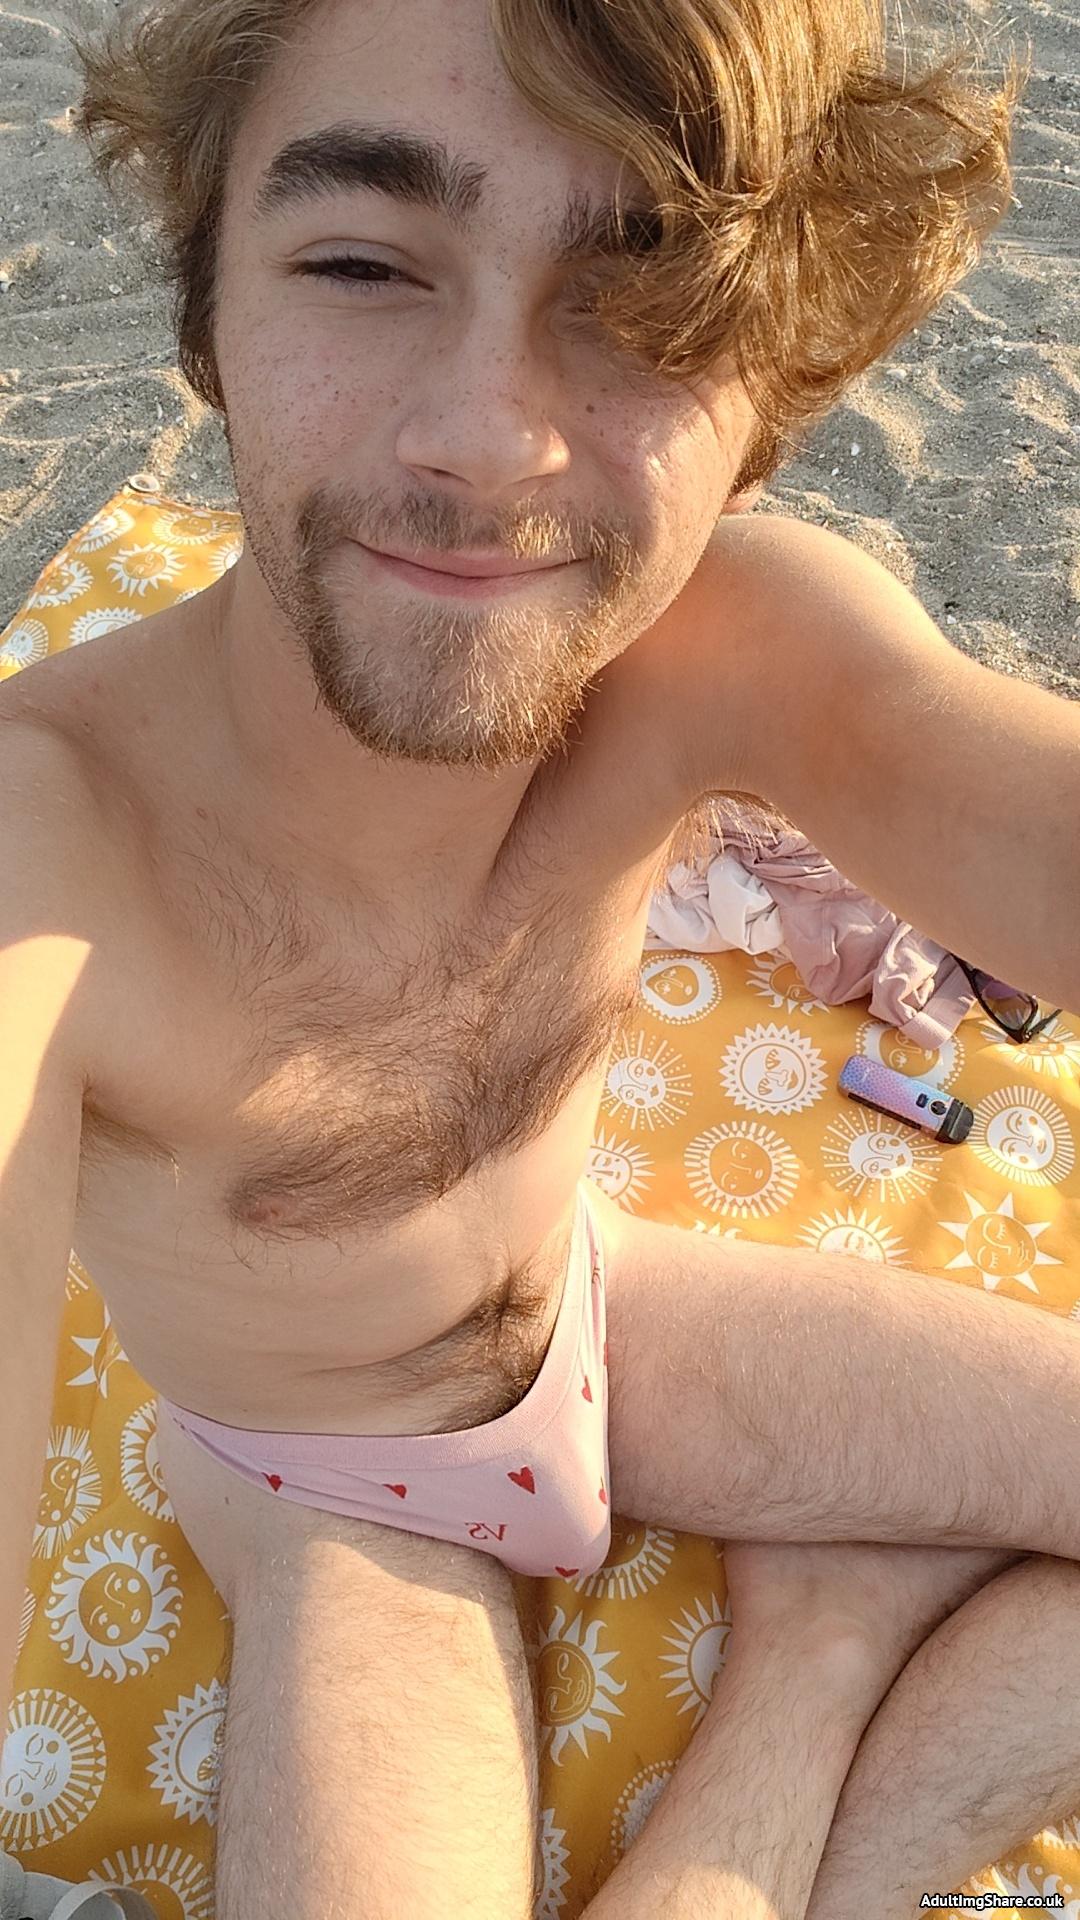 On the beach wearing one of my favorite pairs of panties 